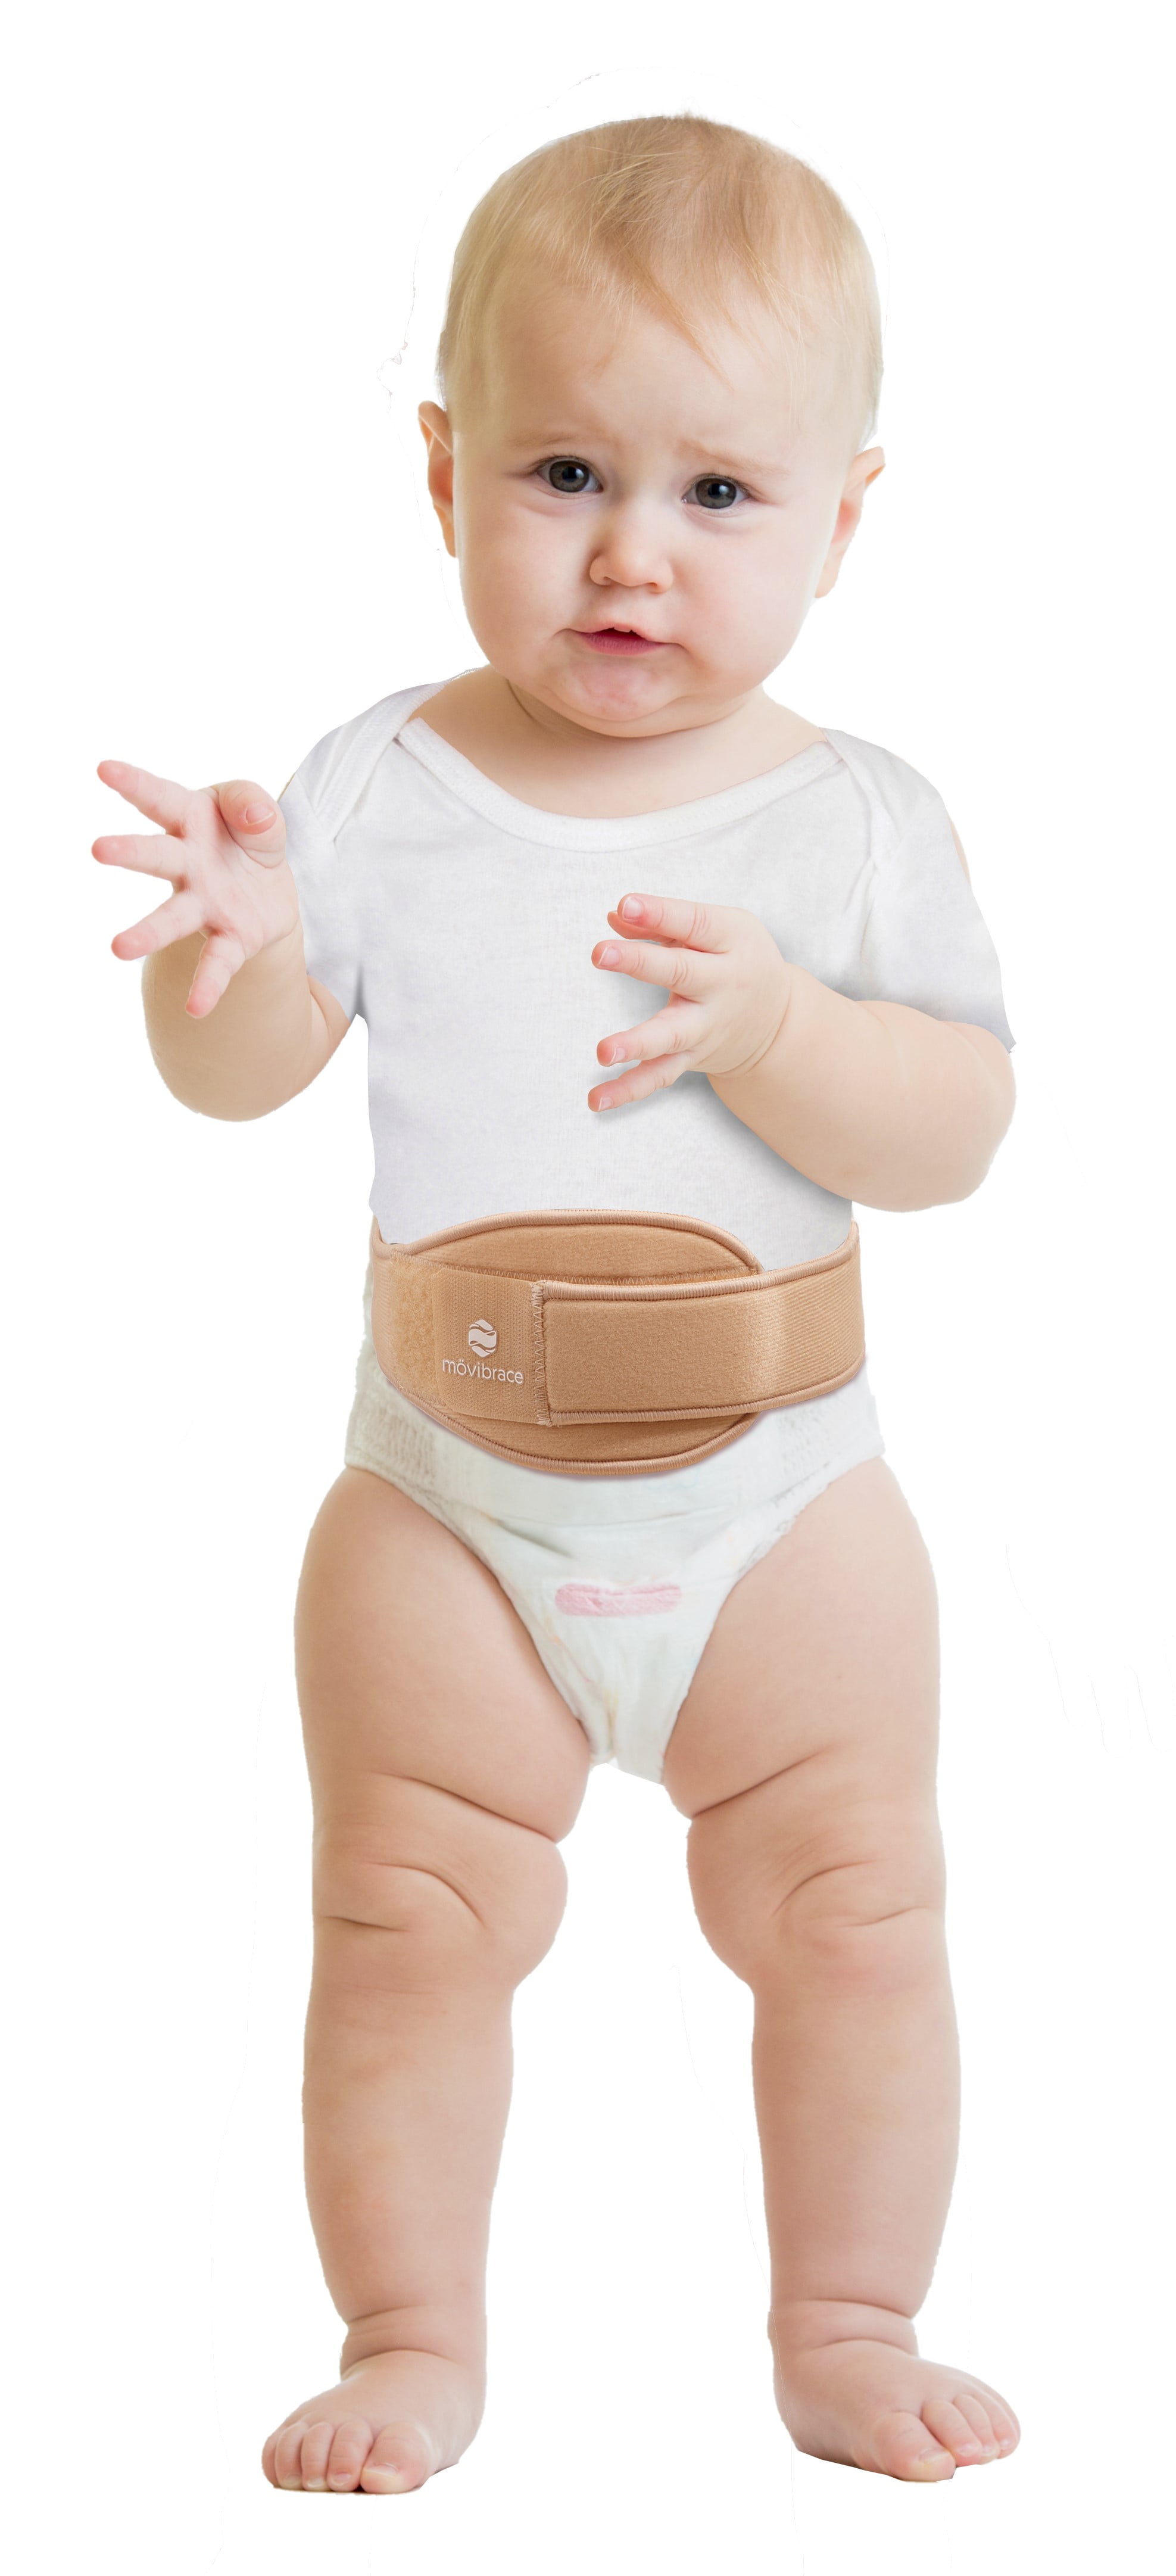 Movibrace Infant and Child Umbilical Hernia Belt - L